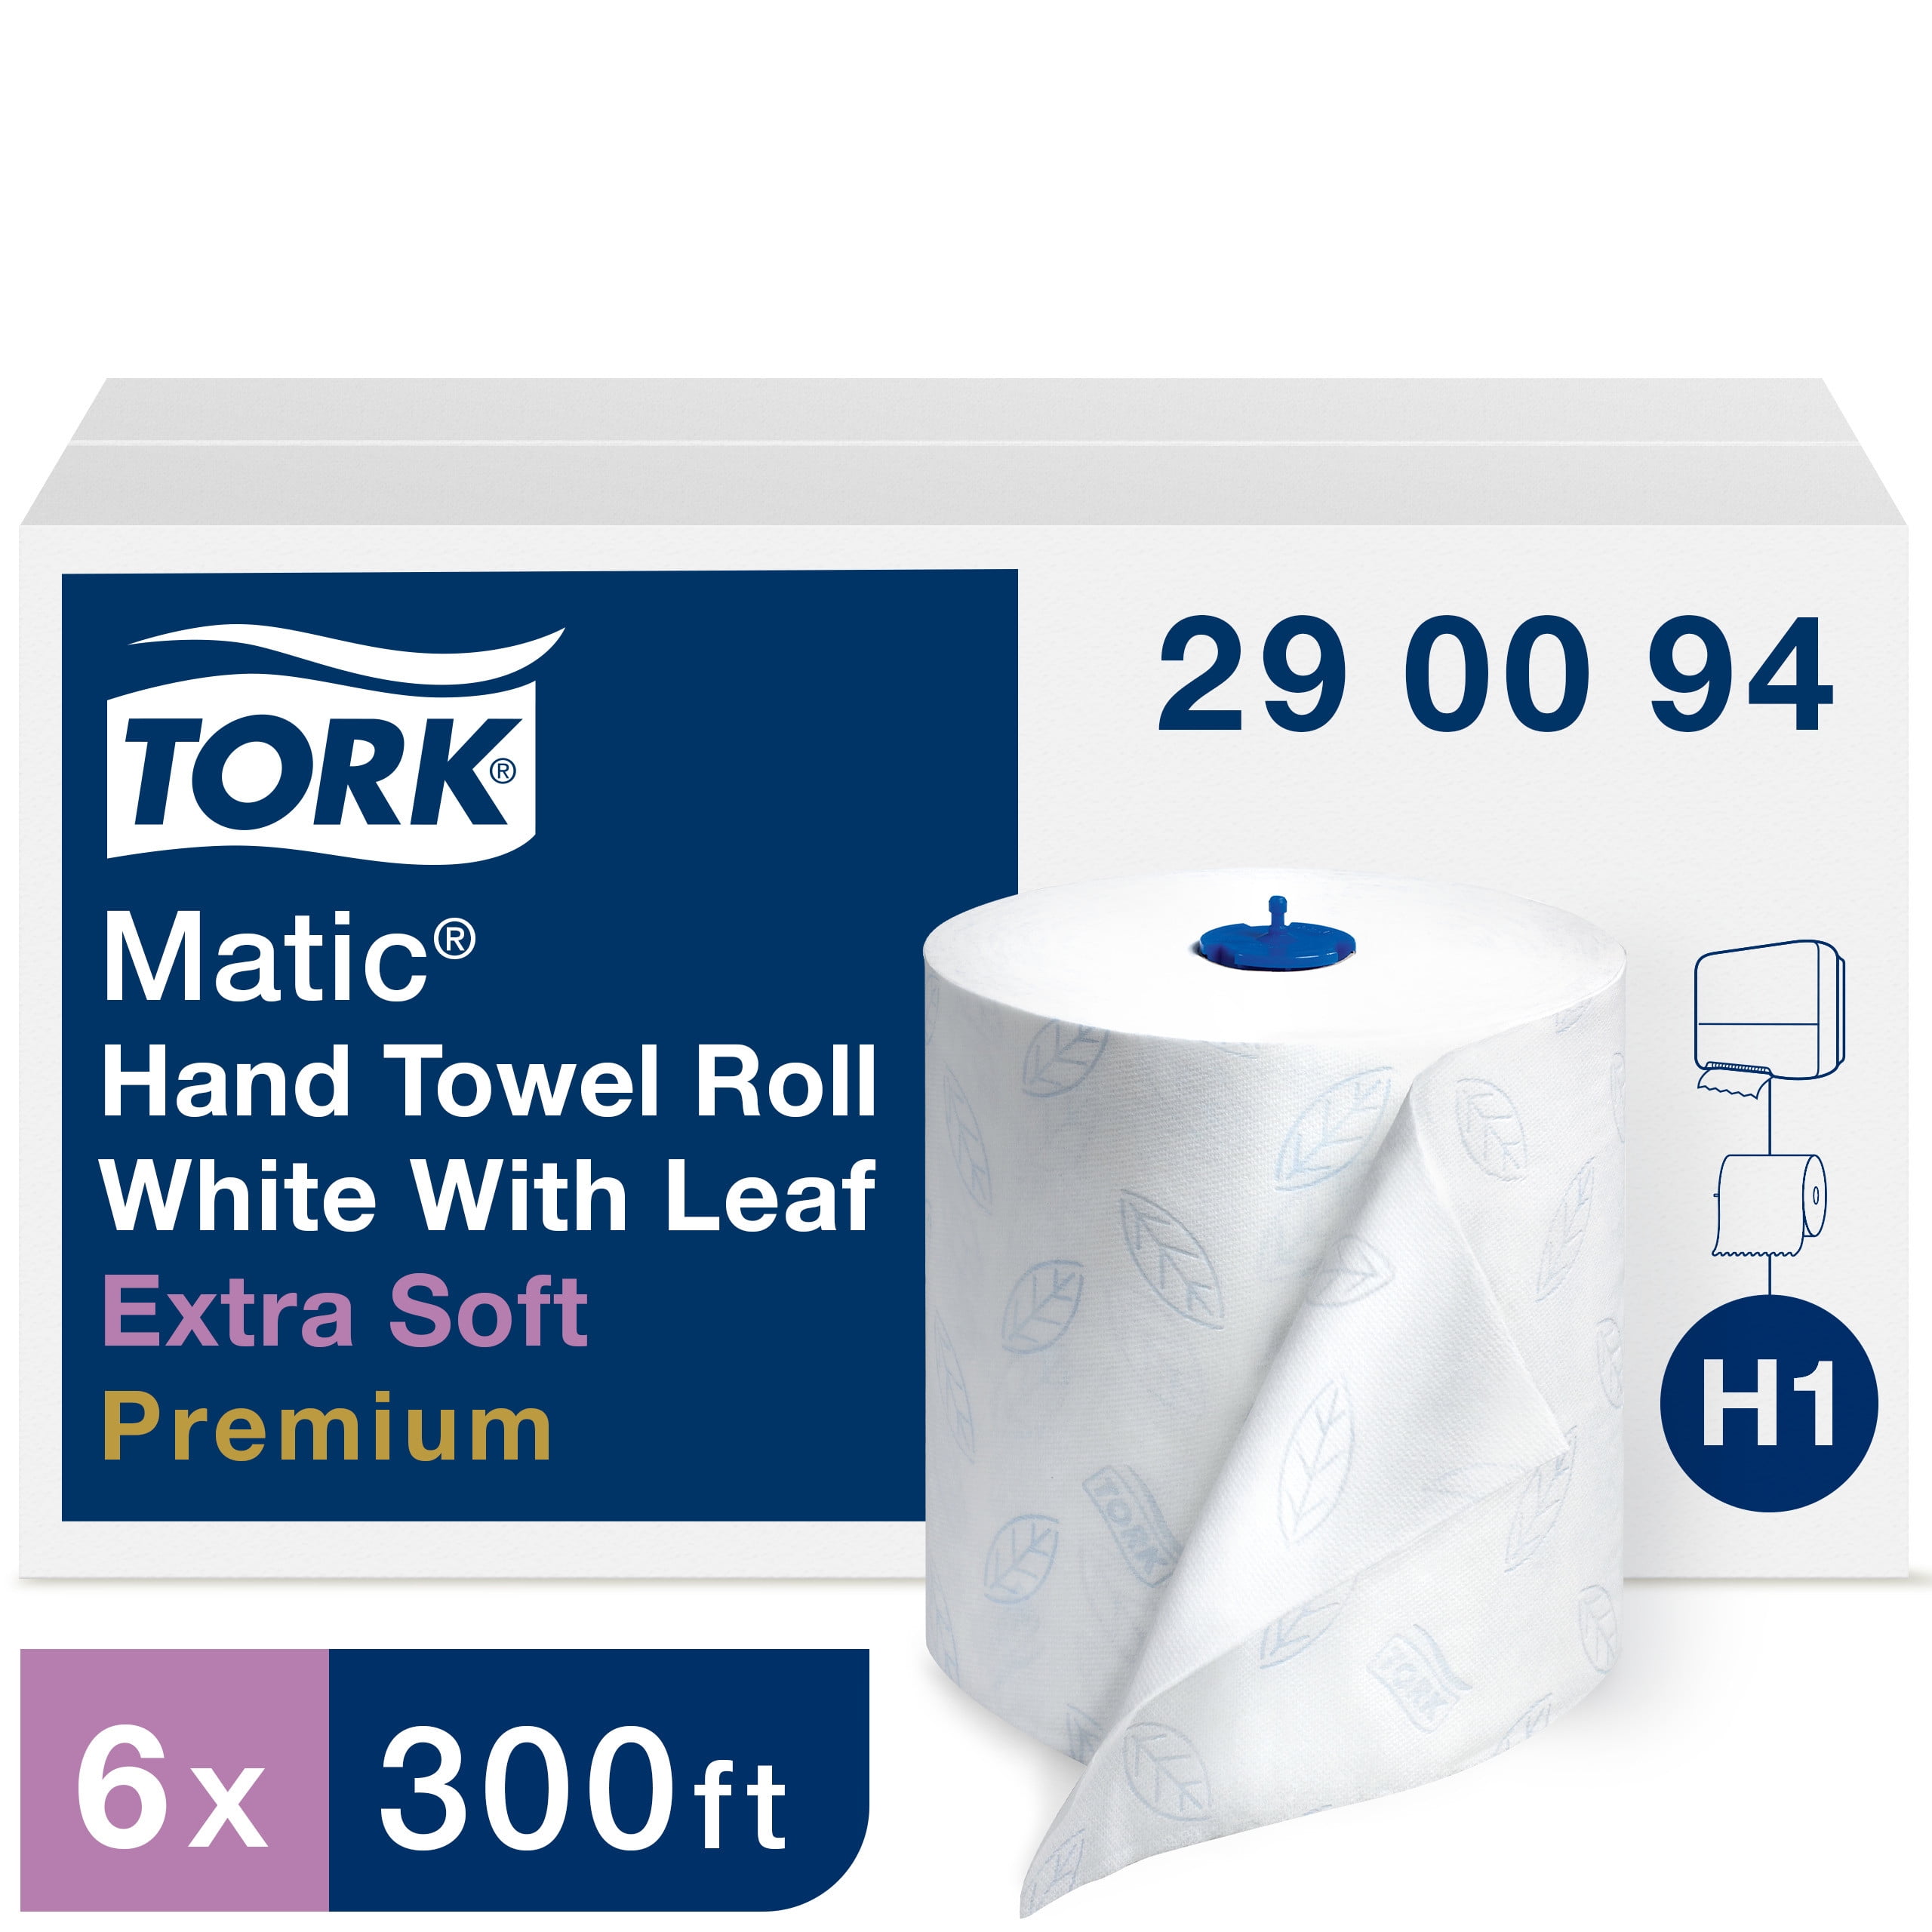 Case of 6 White W/Leaf Tork 290094 Premium Extra Soft Matic Hand Towel Roll 300 Per Roll, 